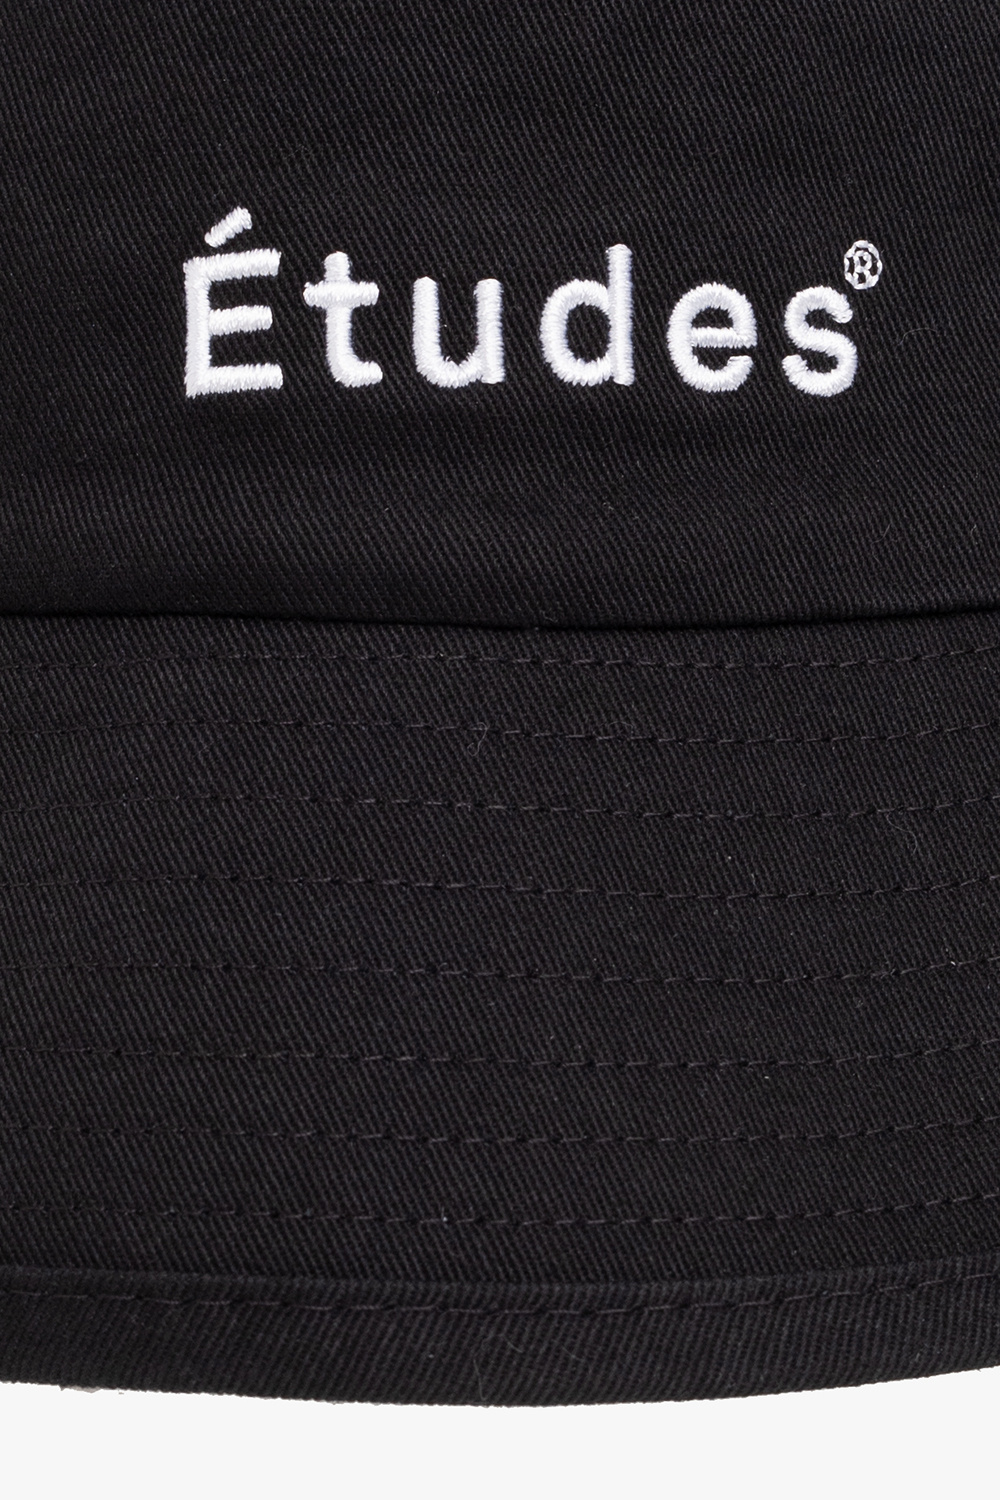 Etudes Bucket hat panel with logo